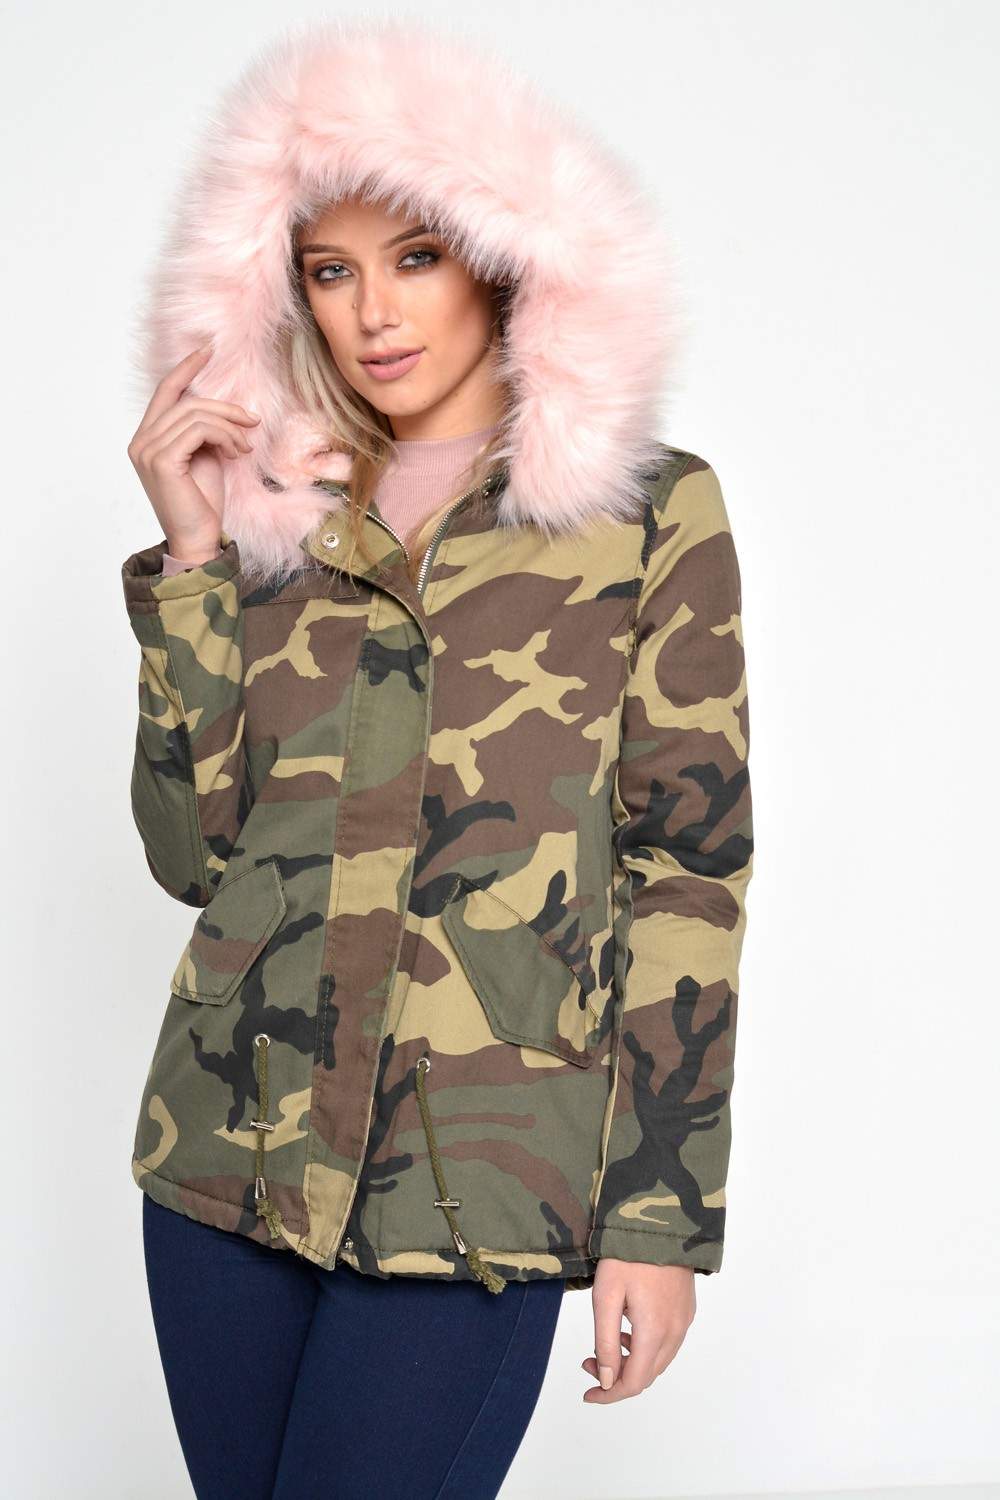 Yu Me Polly Camouflage Fur Trim Jacket in Pink | iCLOTHING